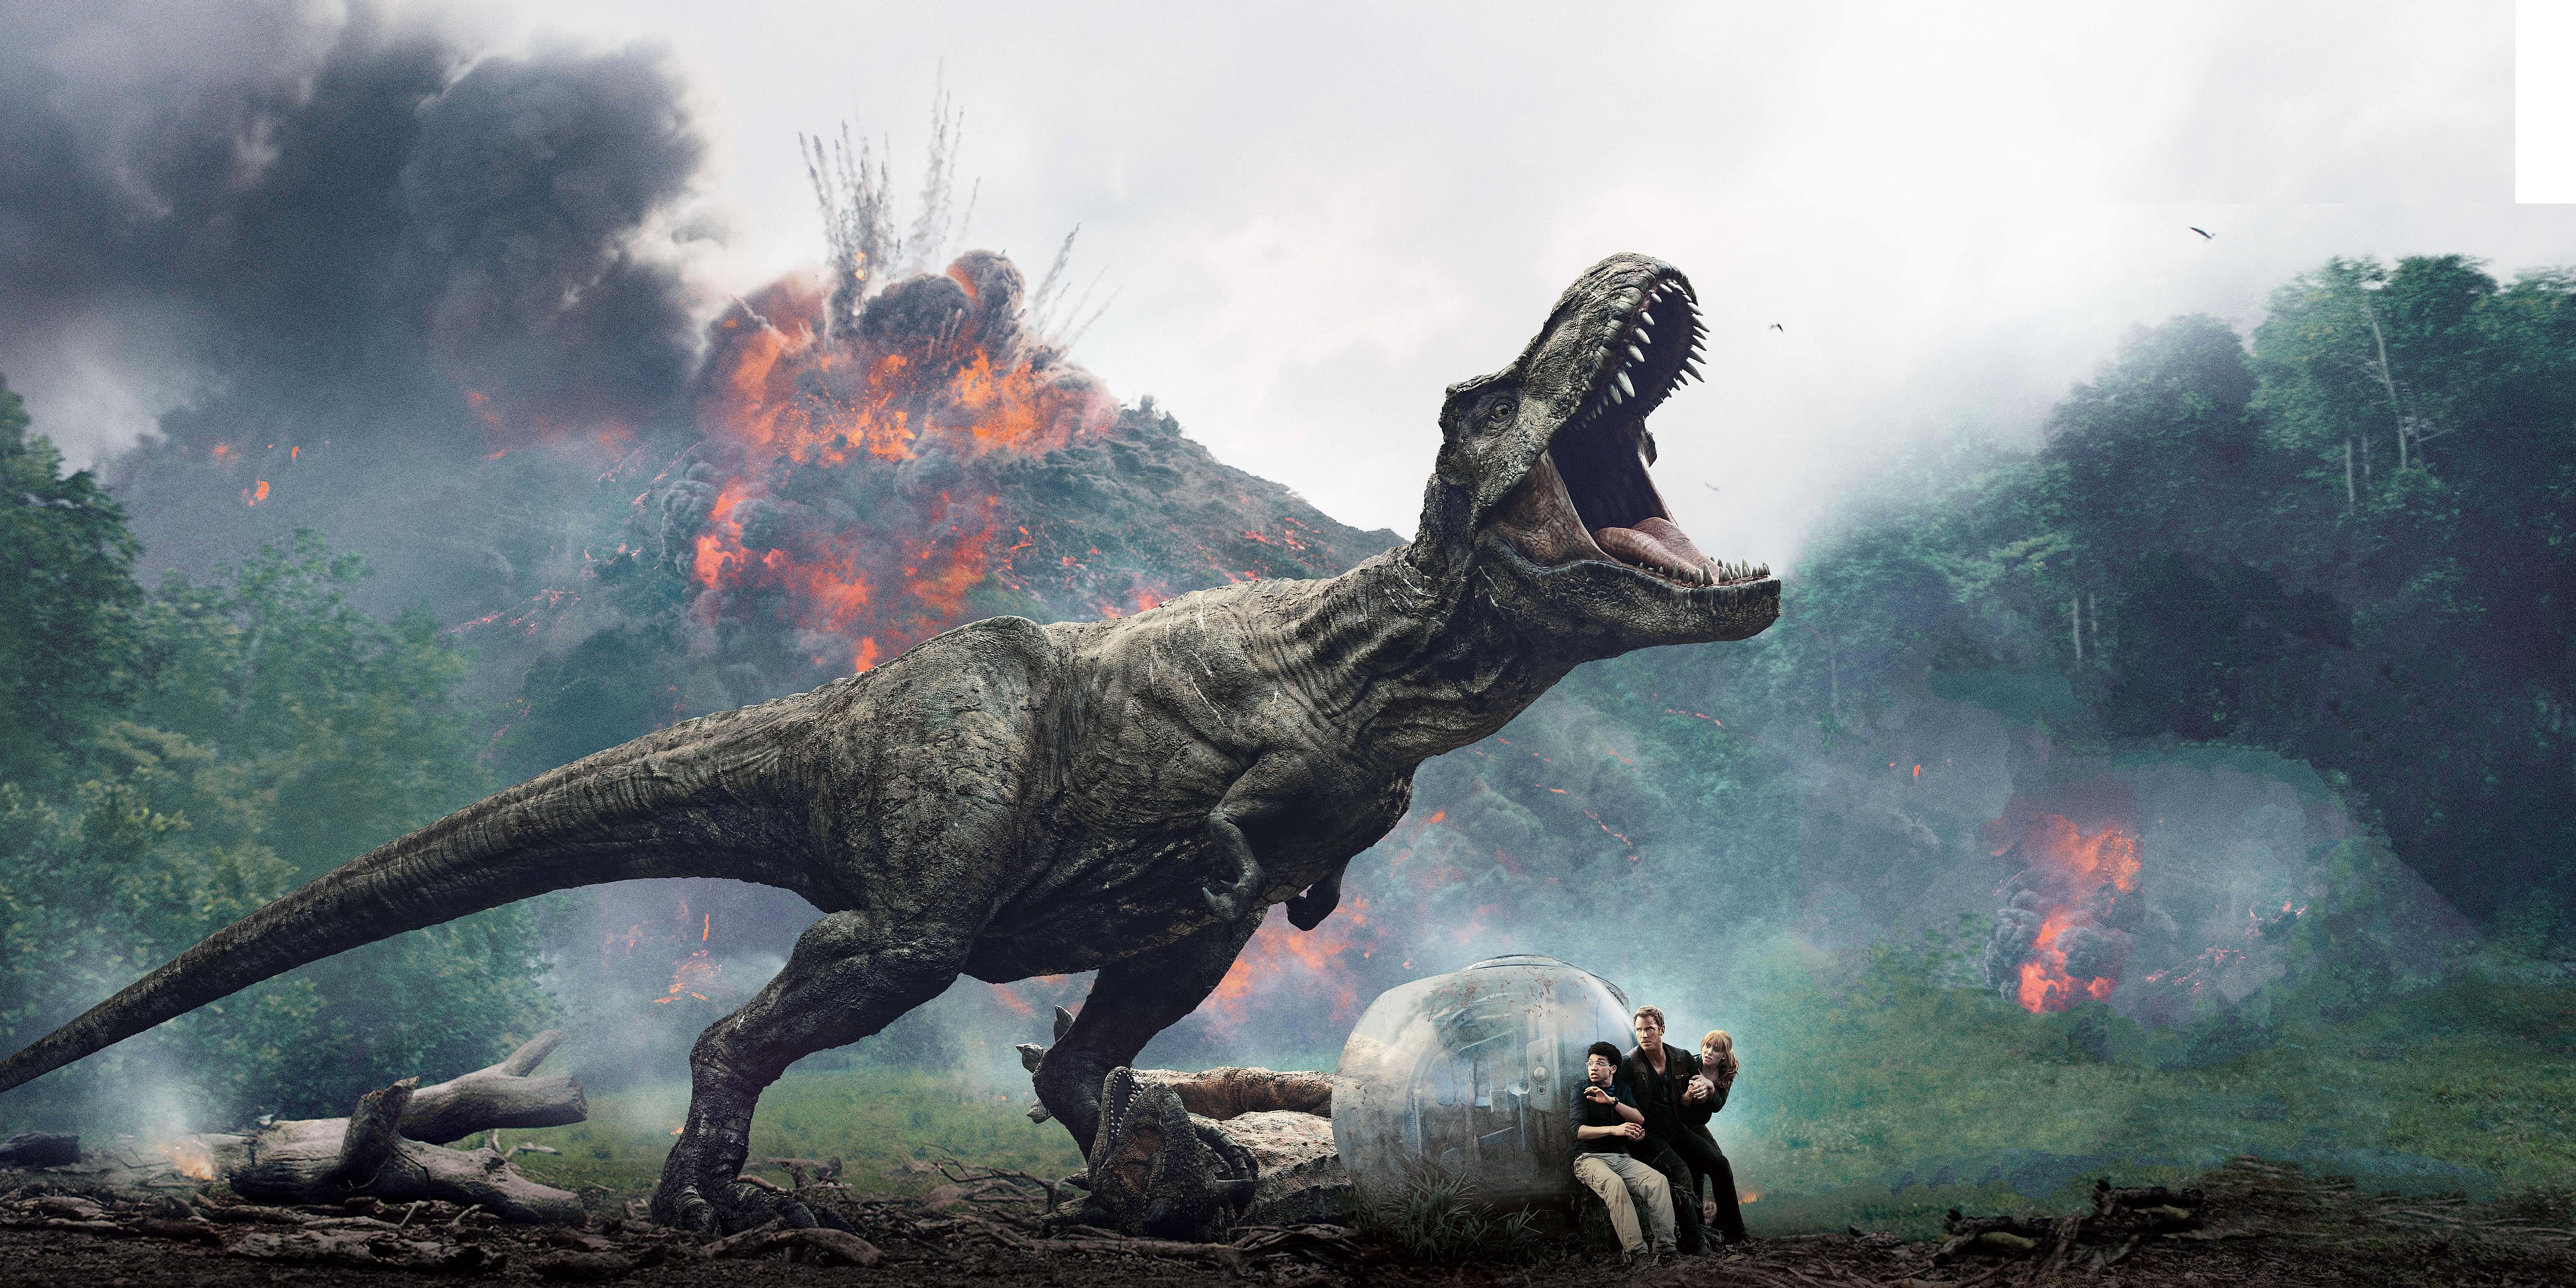 Jurassic World: Fallen Kingdom download the last version for ios